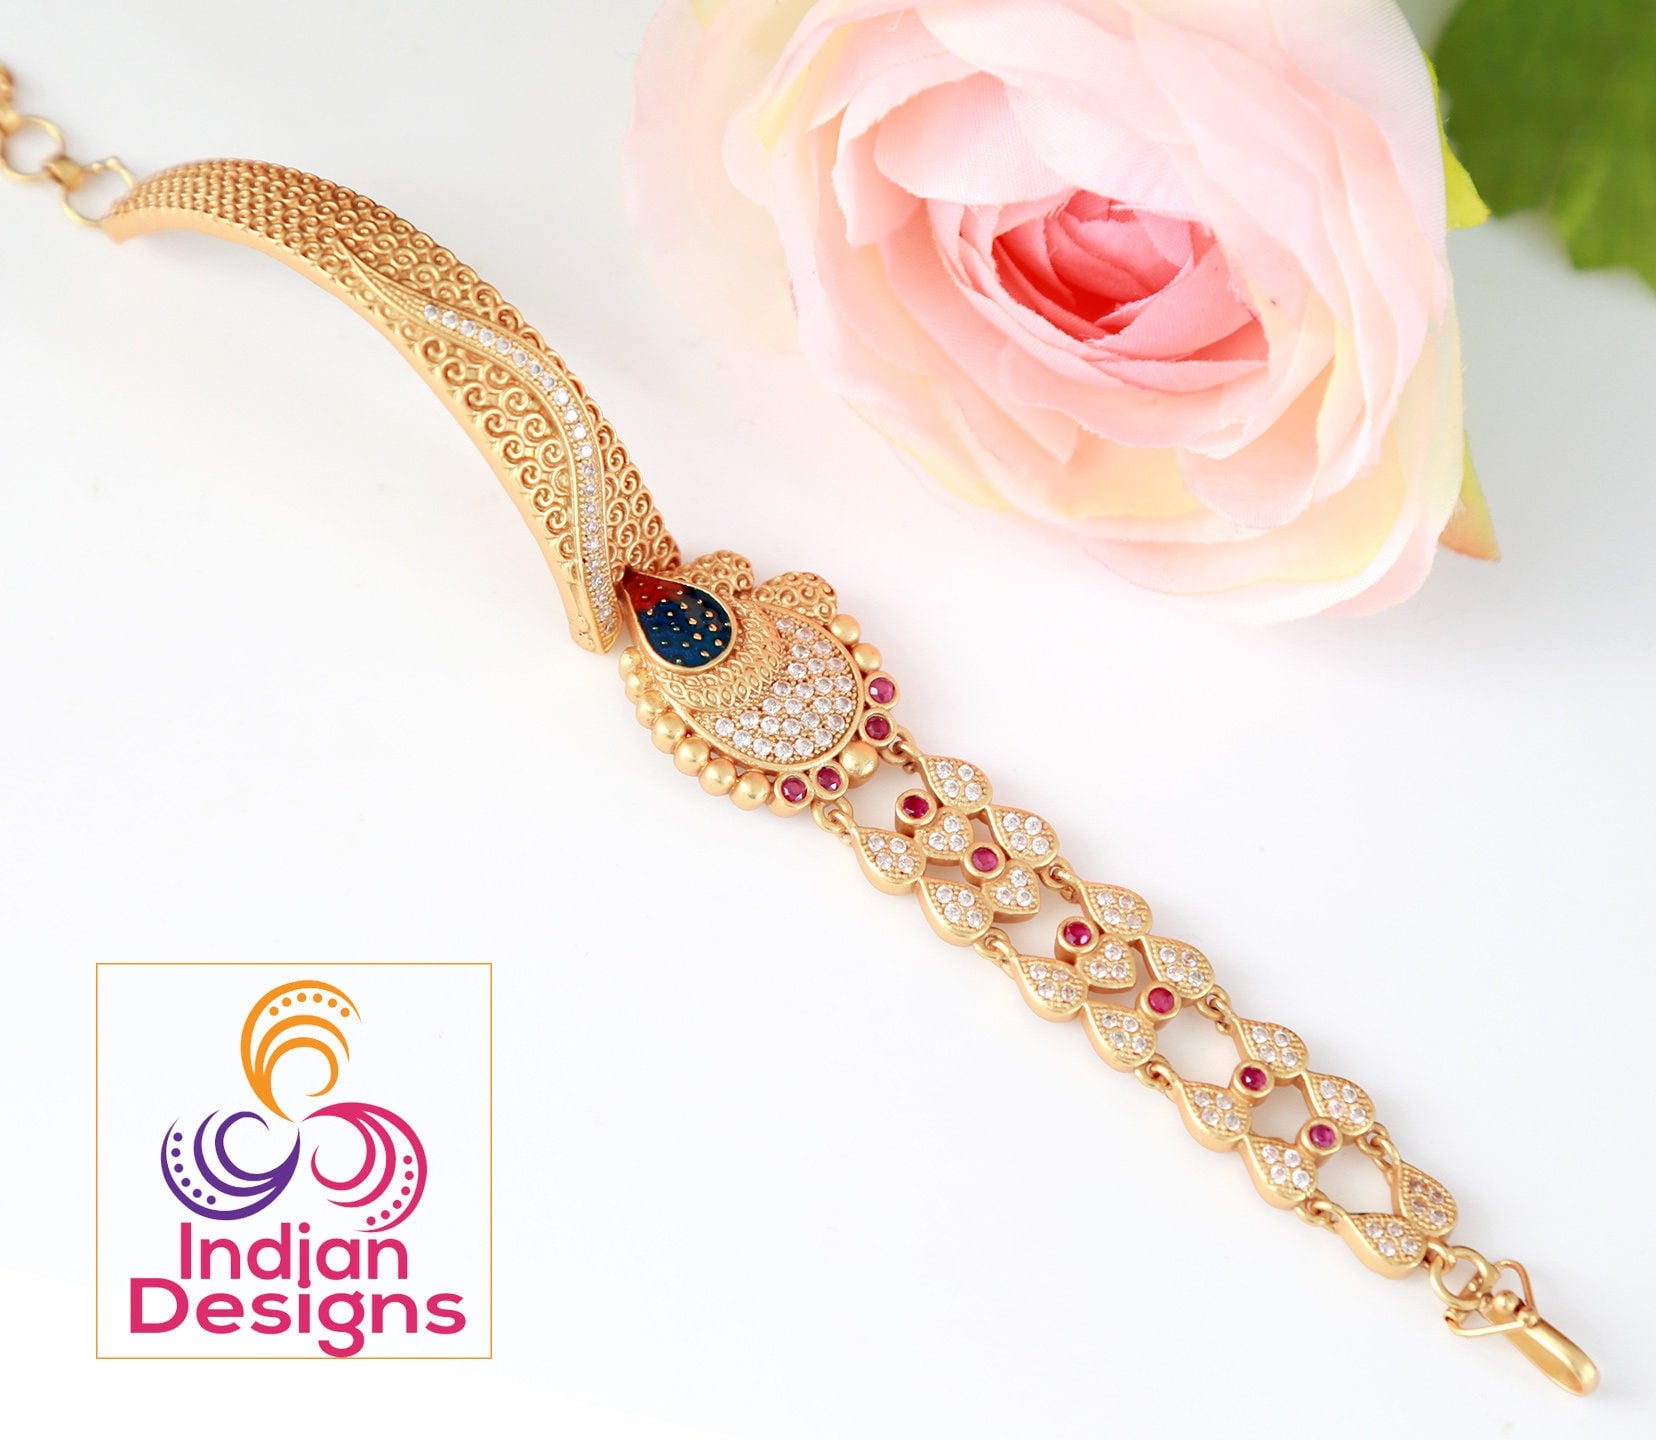 1 Gram Gold Plated Eye-catching Design Mangalsutra Bracelet For Women -  Style A234 at Rs 1560.00 | Women Bracelet Watches, लेडीज़ ब्रेसलेट वॉच,  महिलाओं की ब्रेसलेट घड़ी - Soni Fashion, Rajkot | ID: 2851758288991